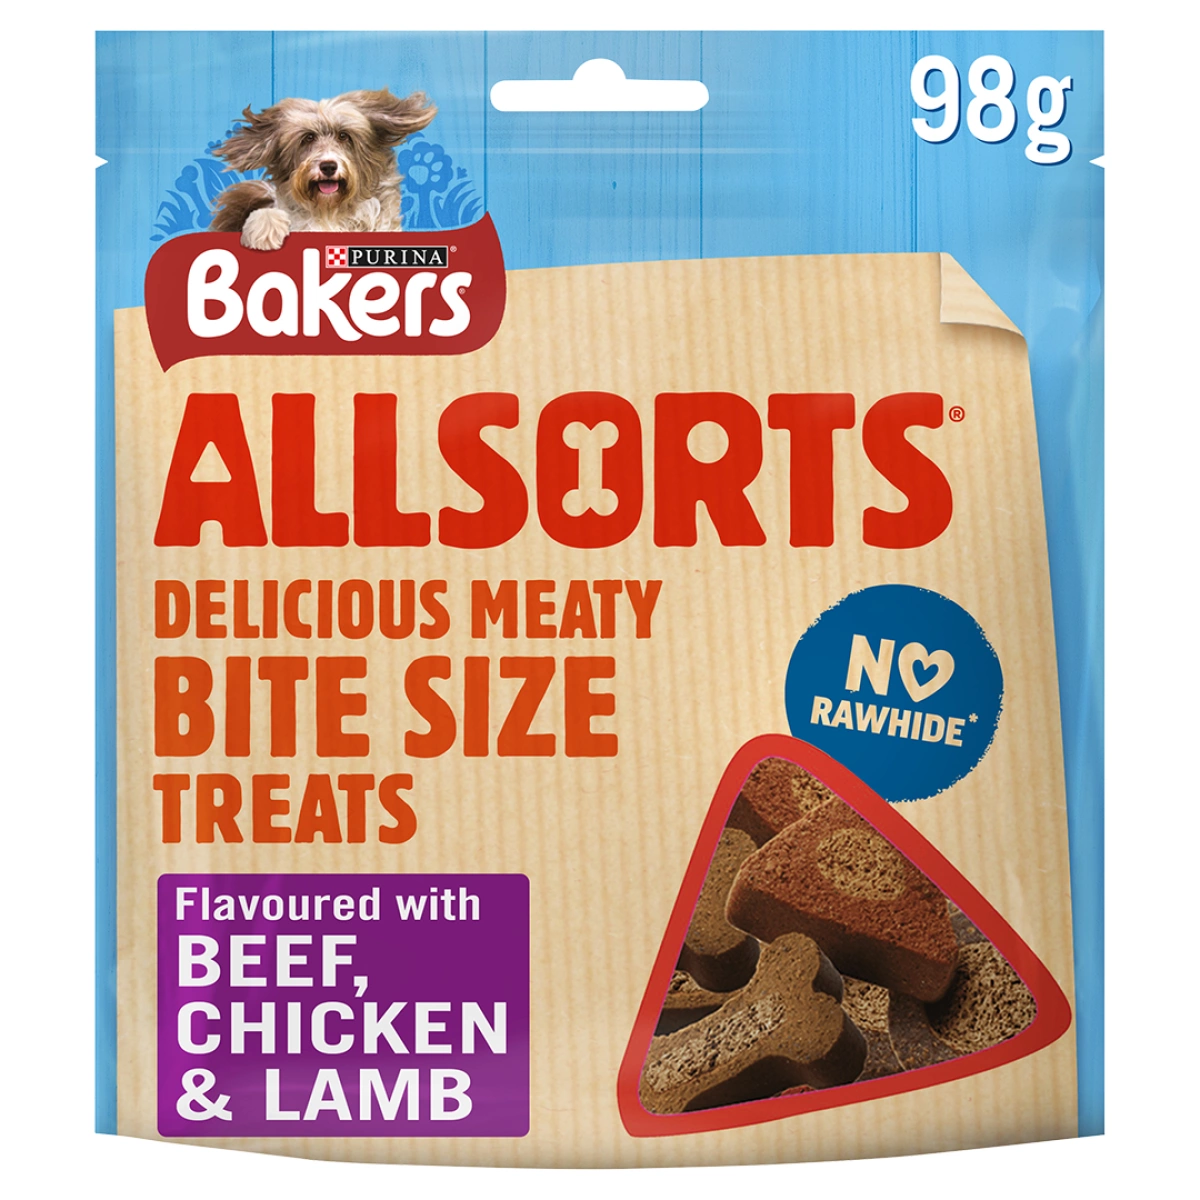 Bakers Allsorts Dog Treats 98g Main Image